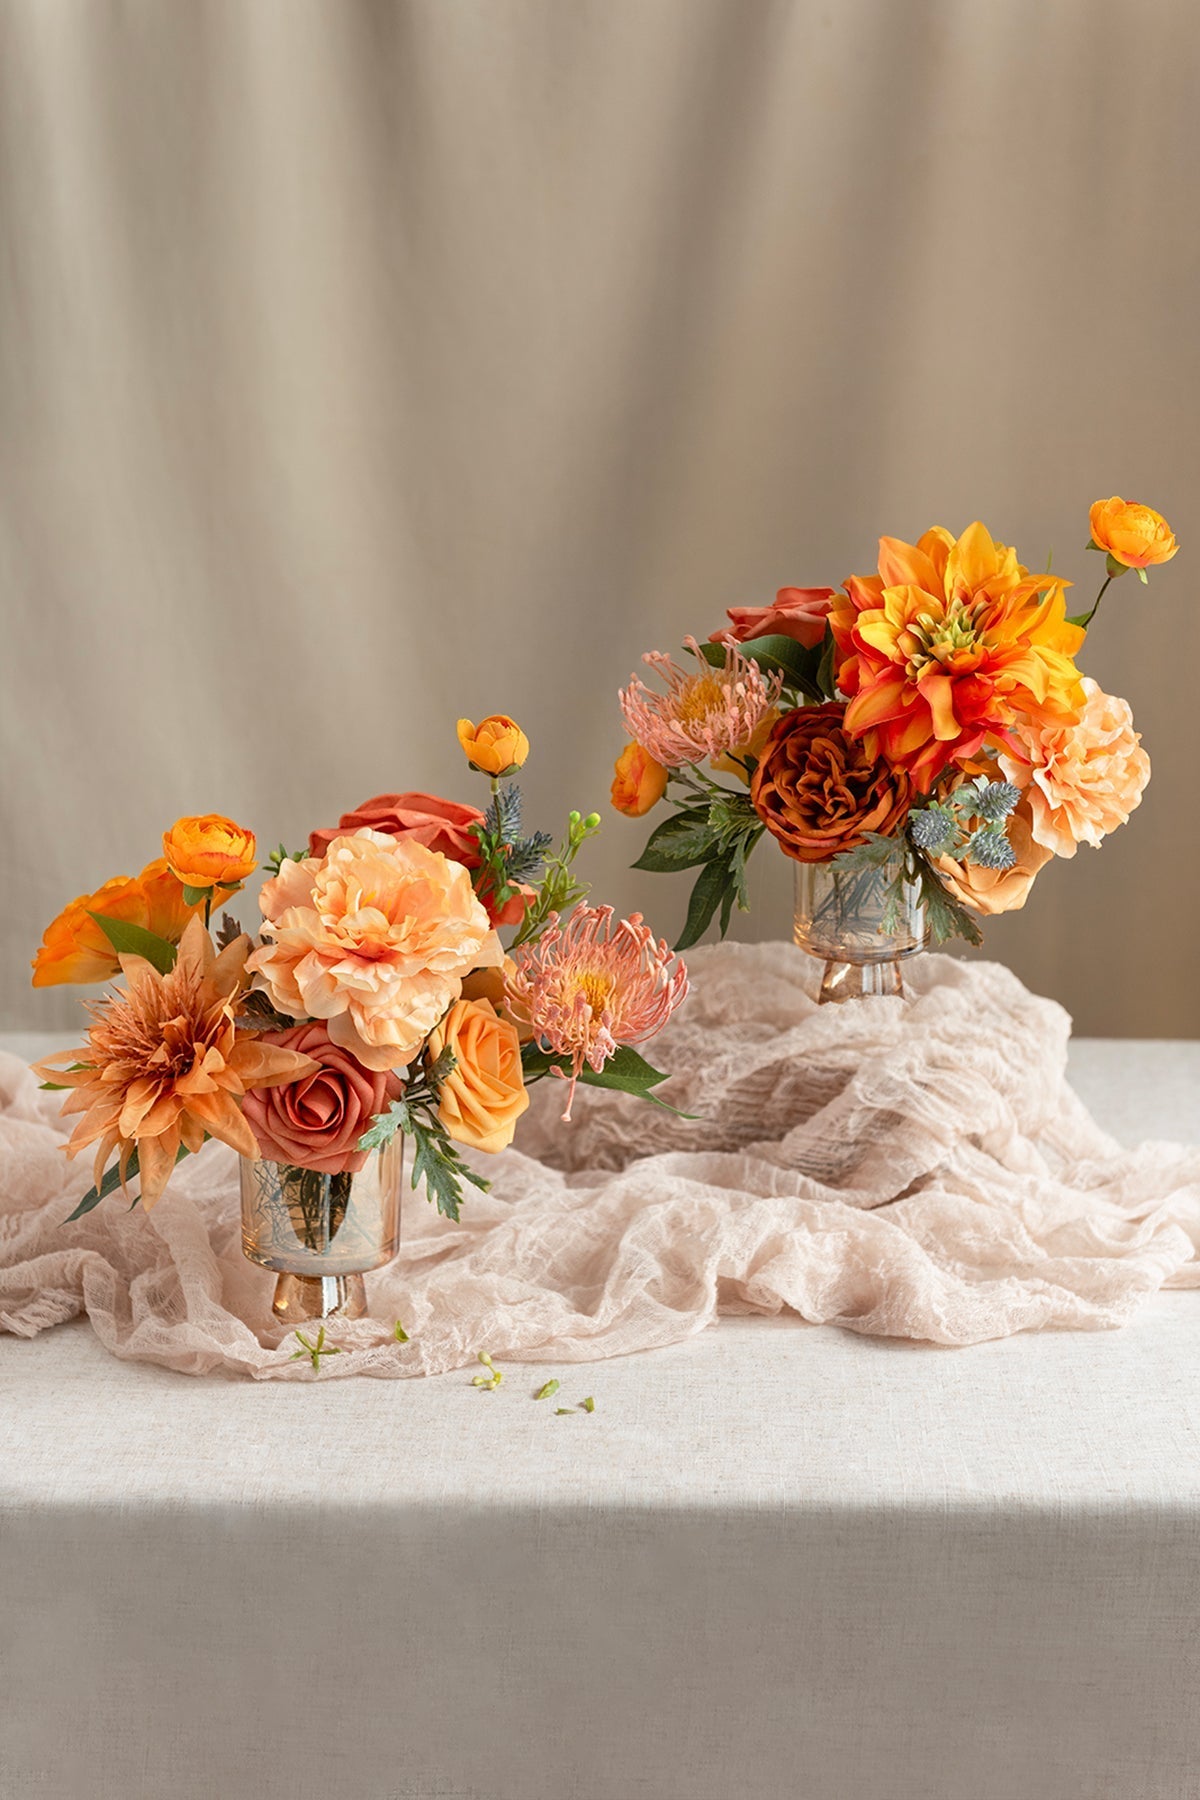 Additional Vases & DIY Tools in Orange Colors